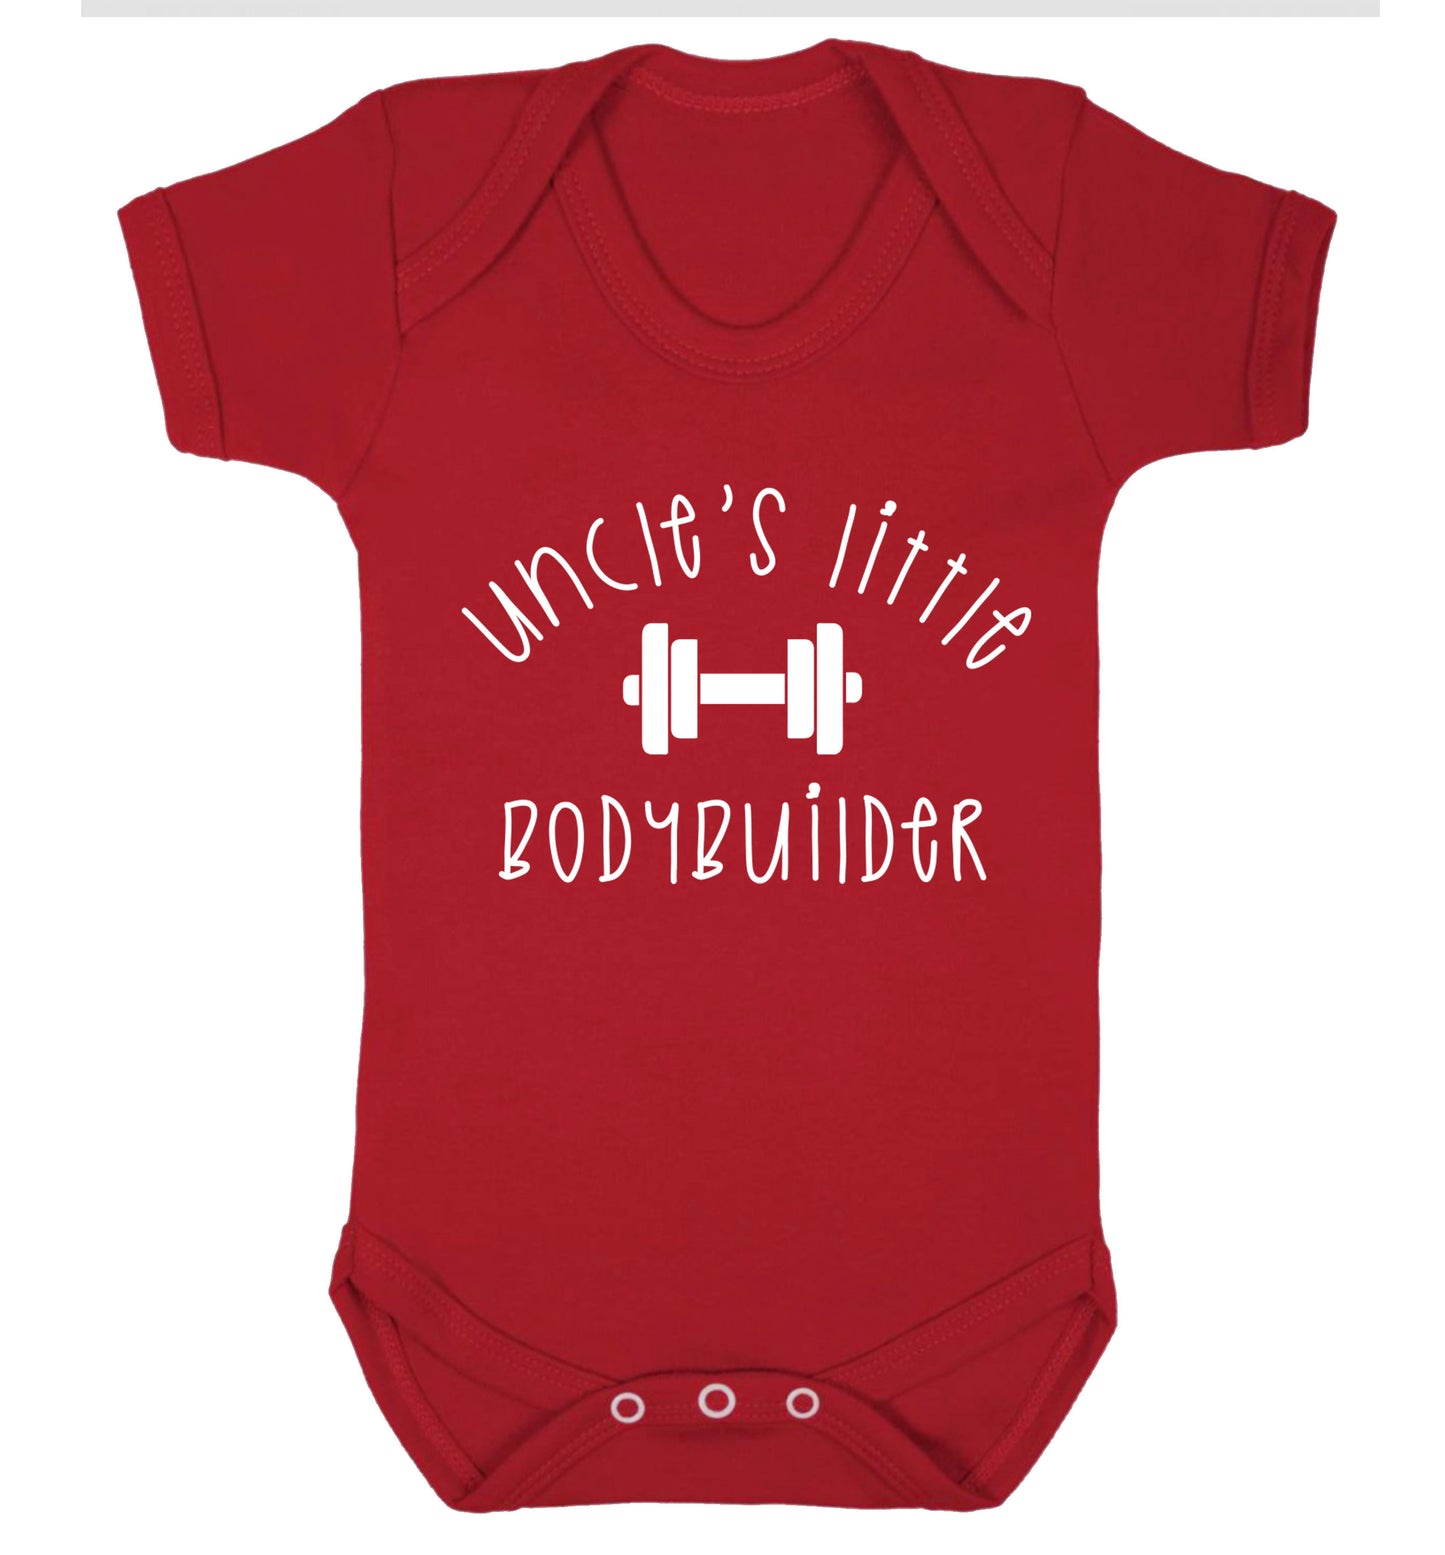 Uncle's little bodybuilder Baby Vest red 18-24 months